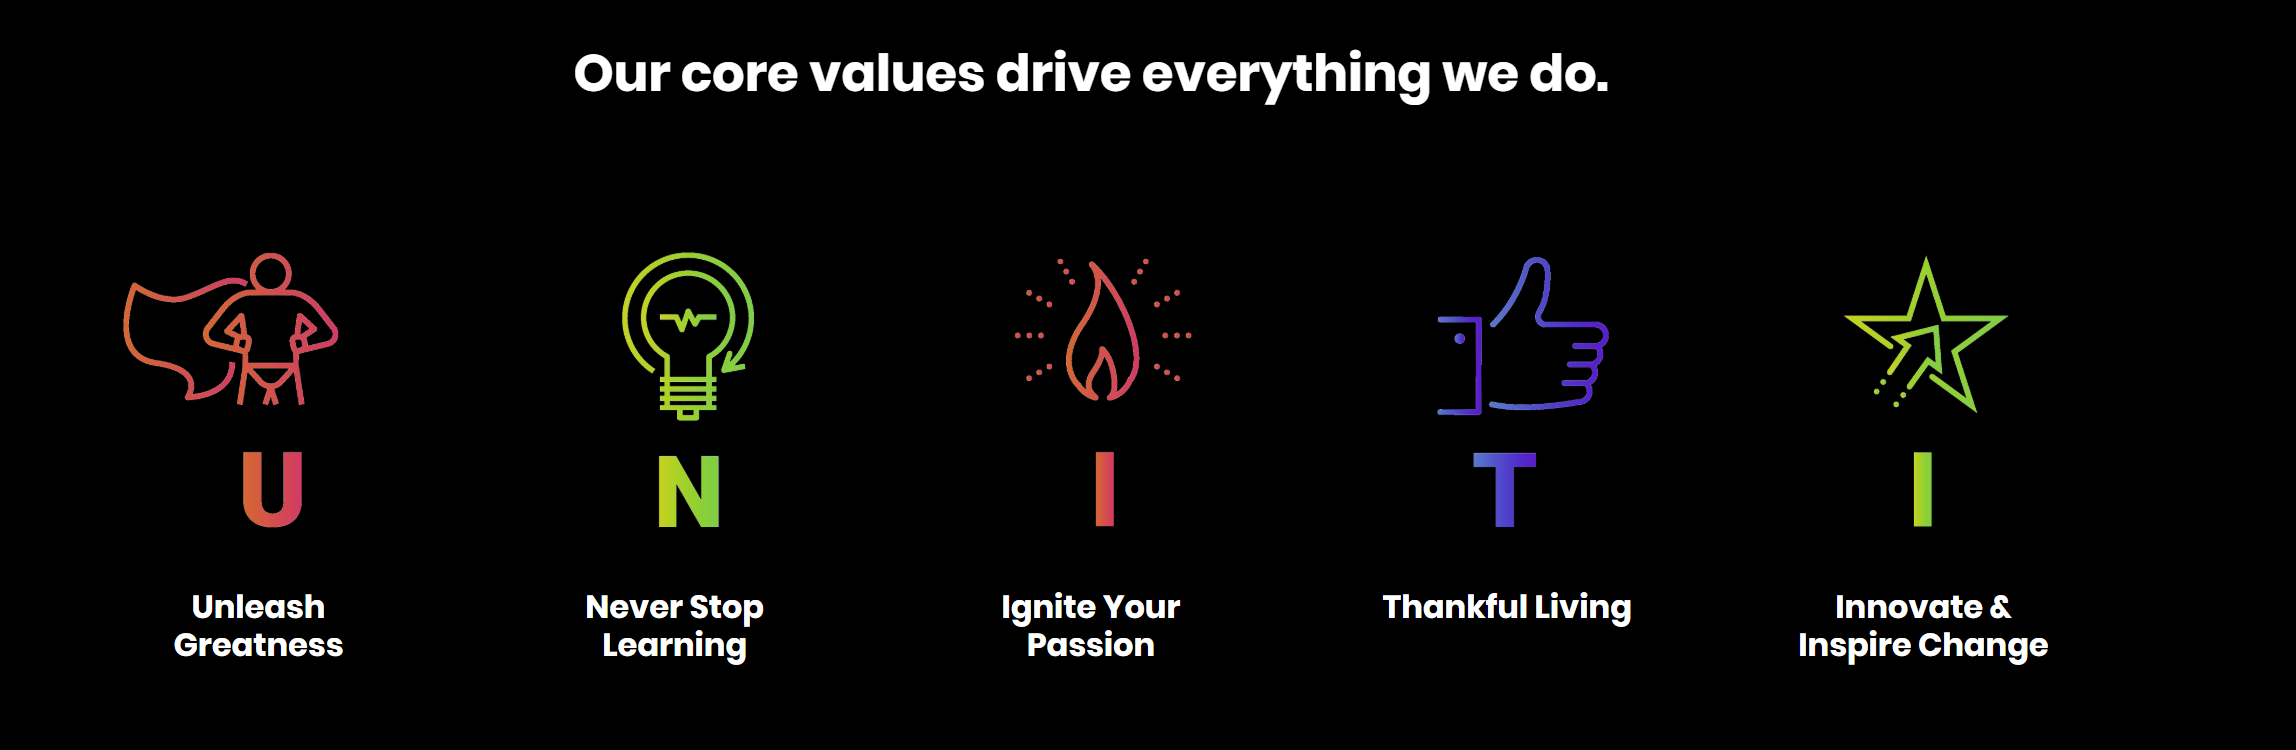 tinuiti core values